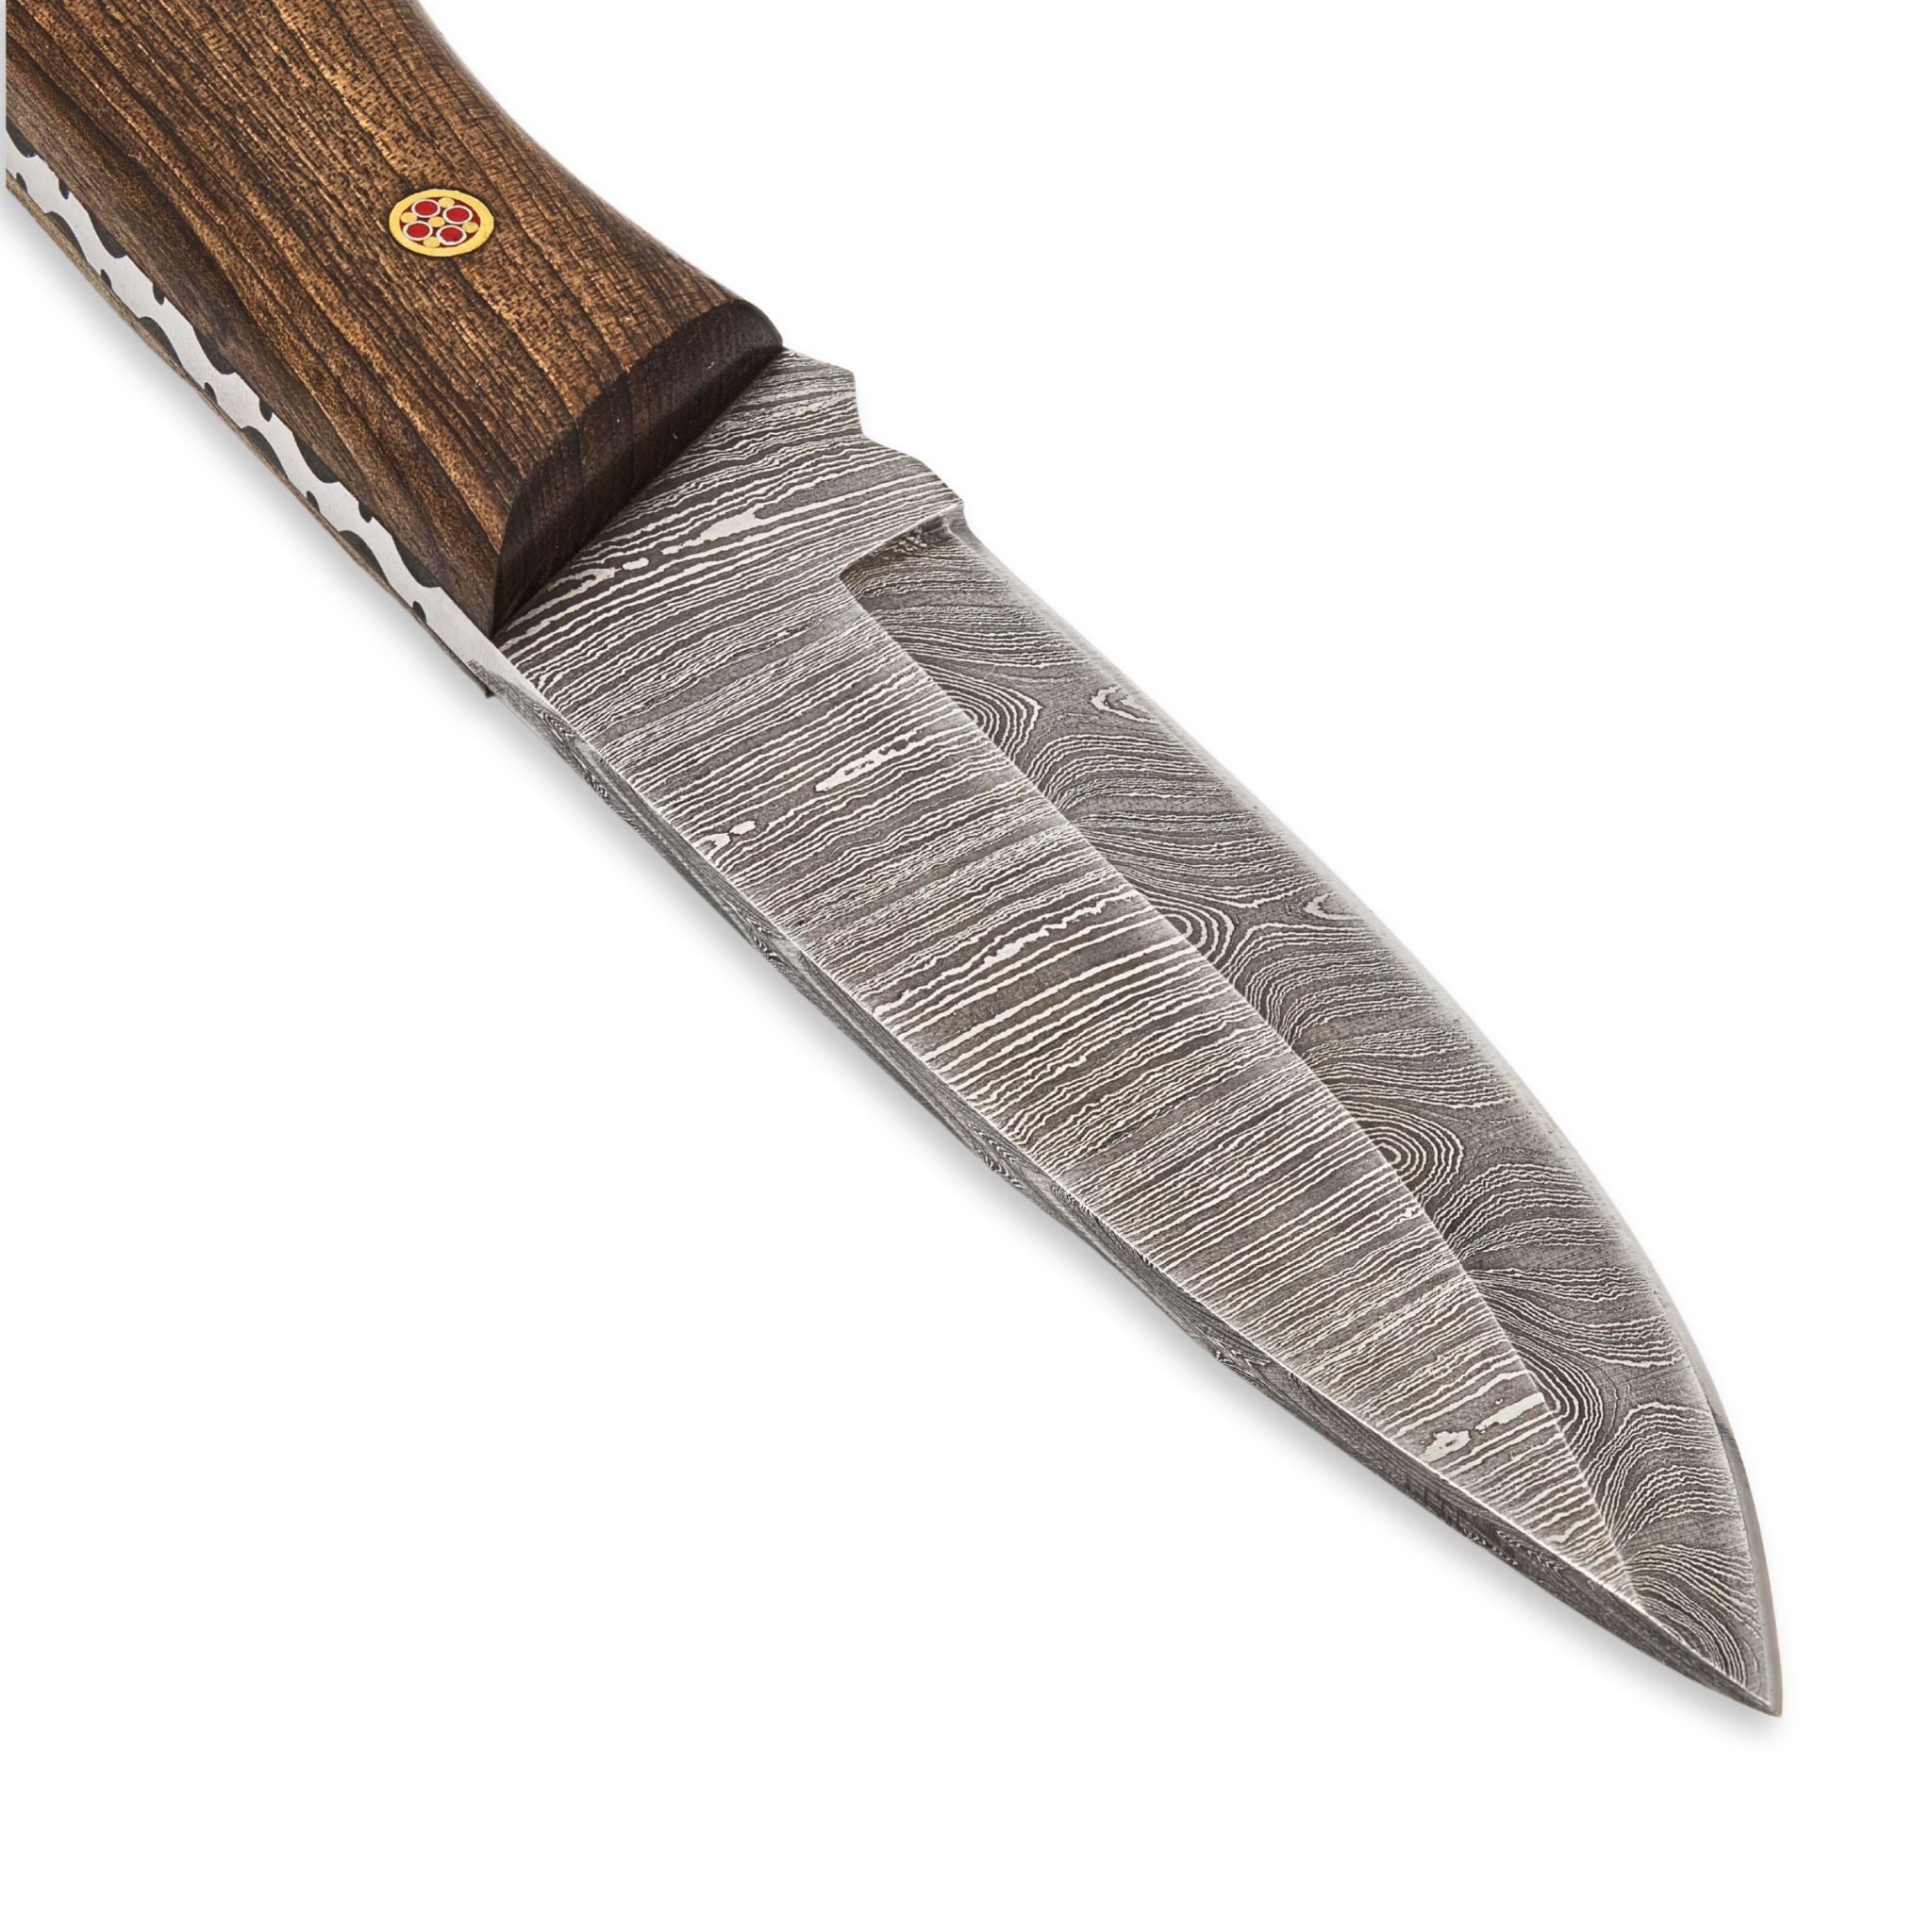 Outback Nomad III, Handmade Knife